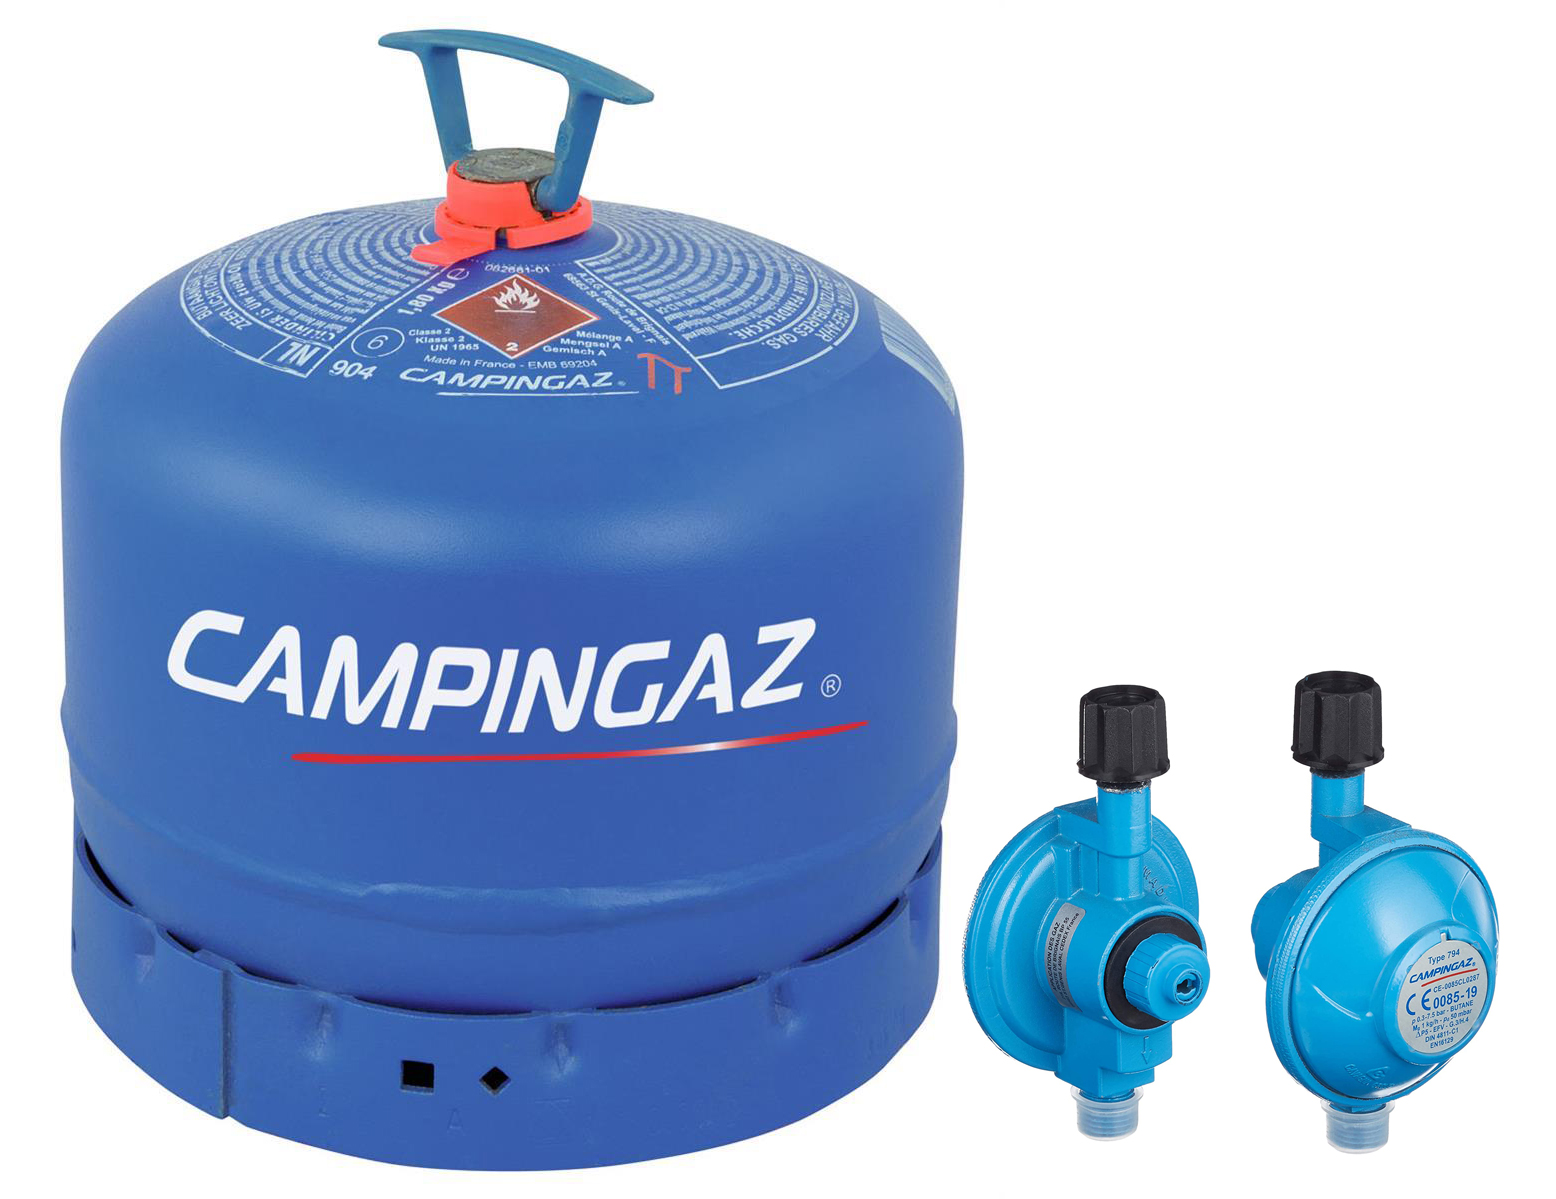 Campingaz R 904 Gasflasche - 1,8 kg Butangas mit 50 mBar Regler im Set